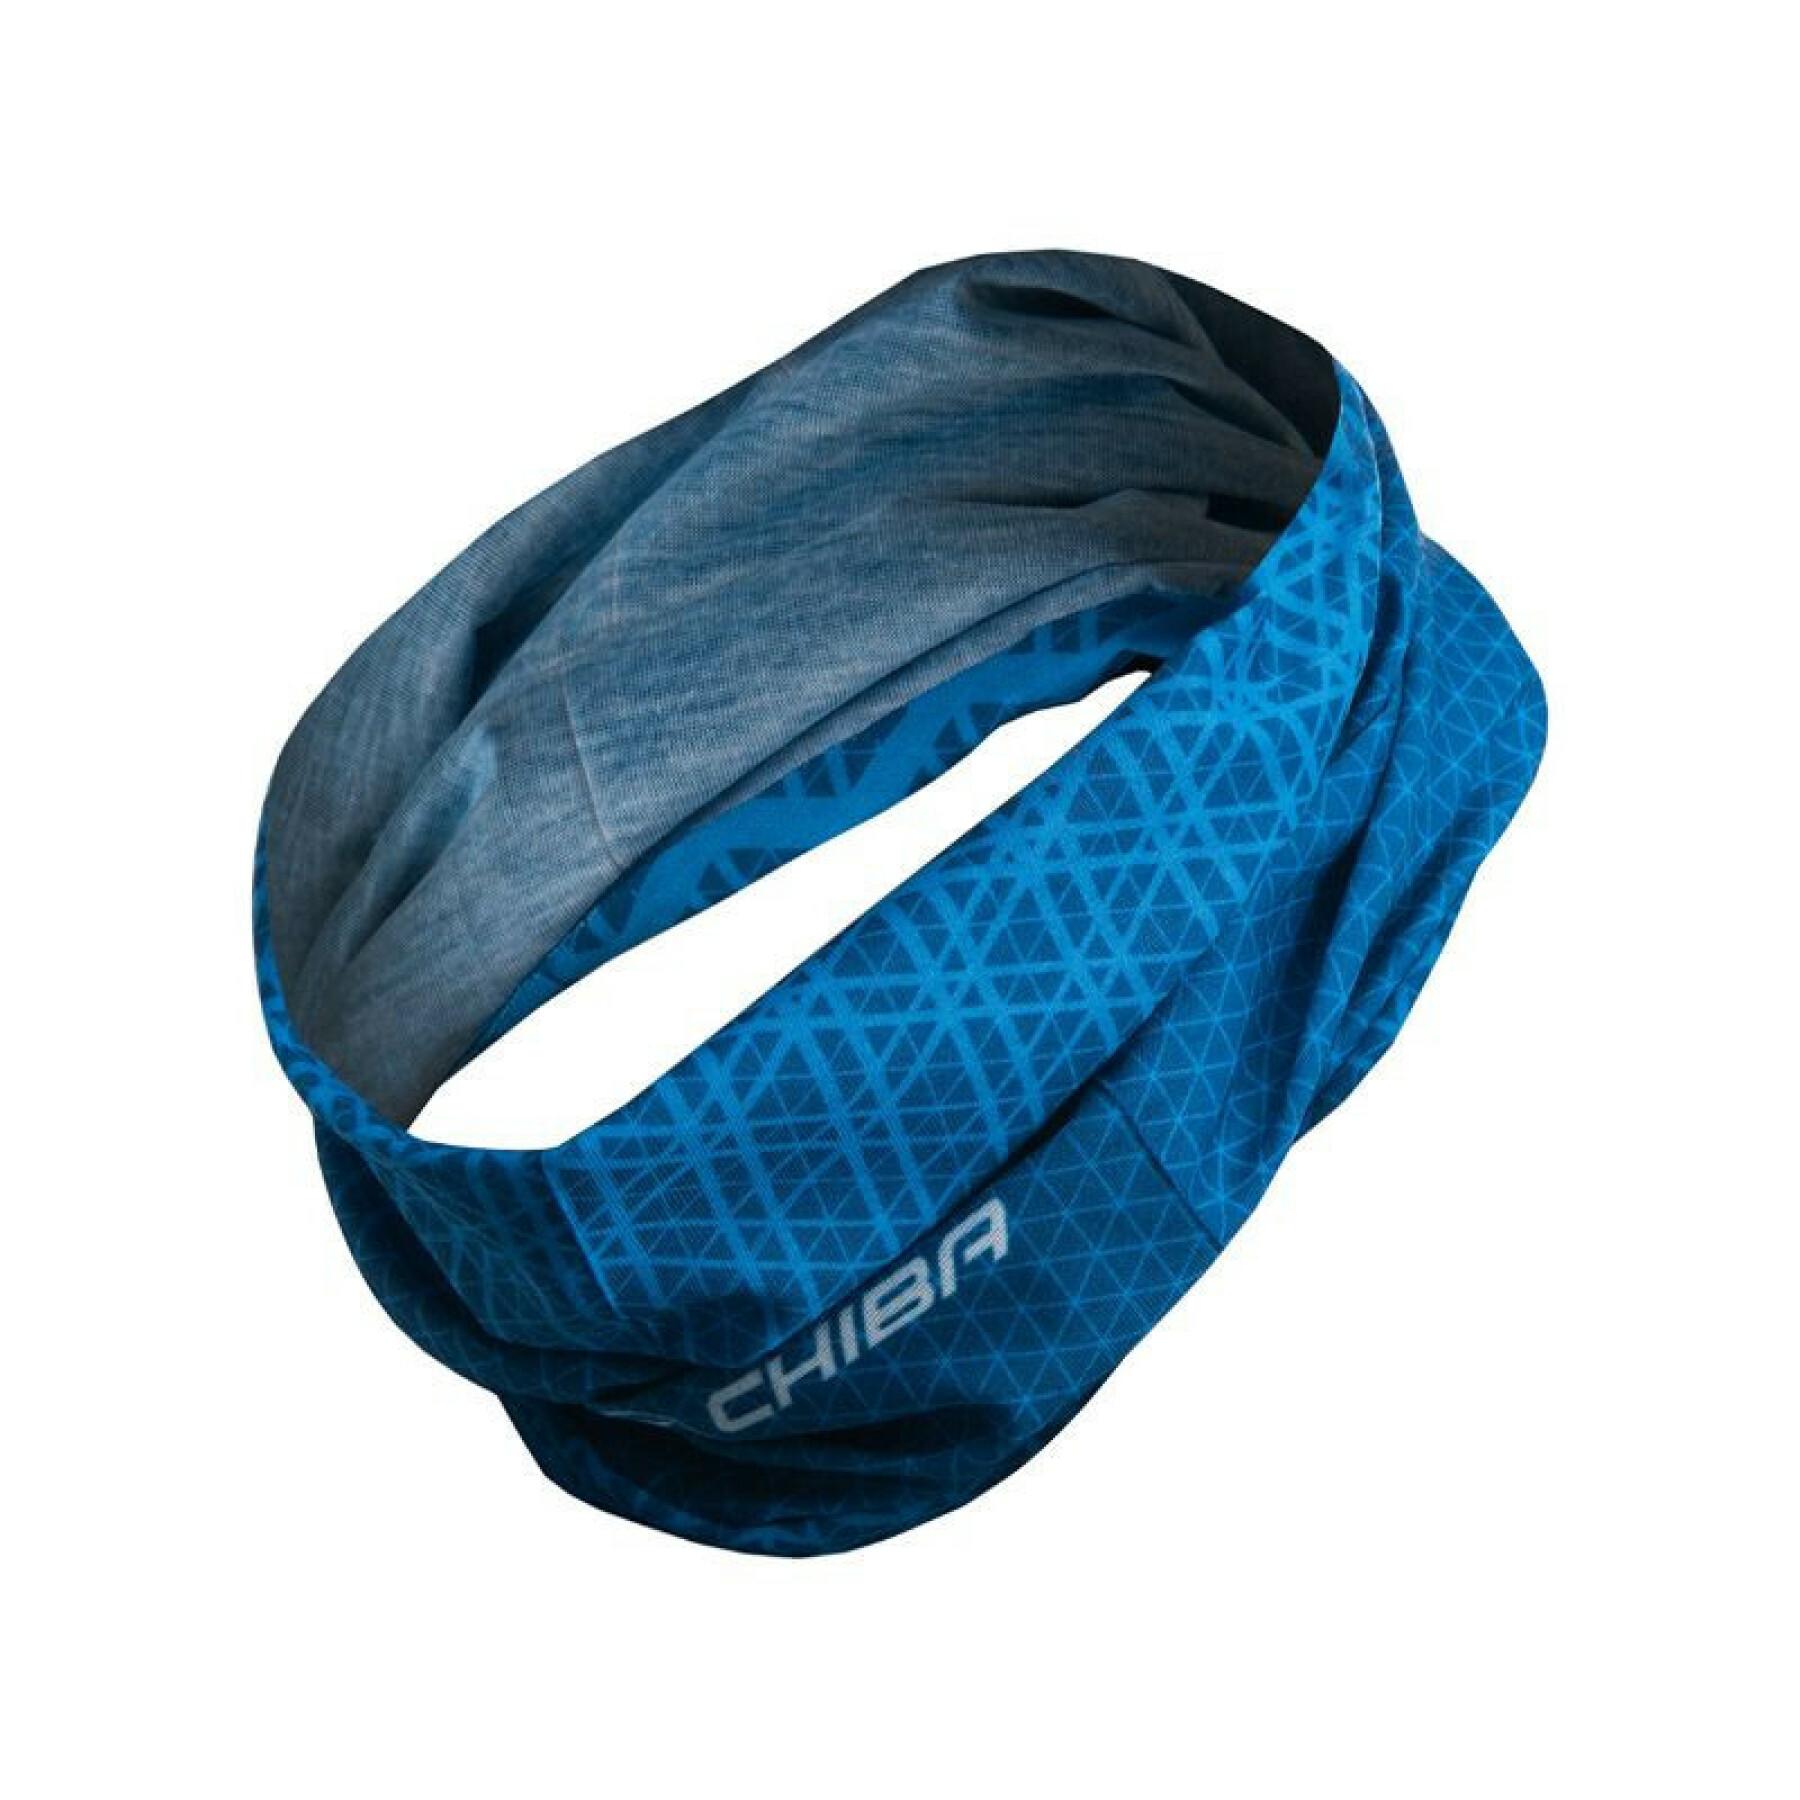 Halsband - bandana - hoofdband Chiba